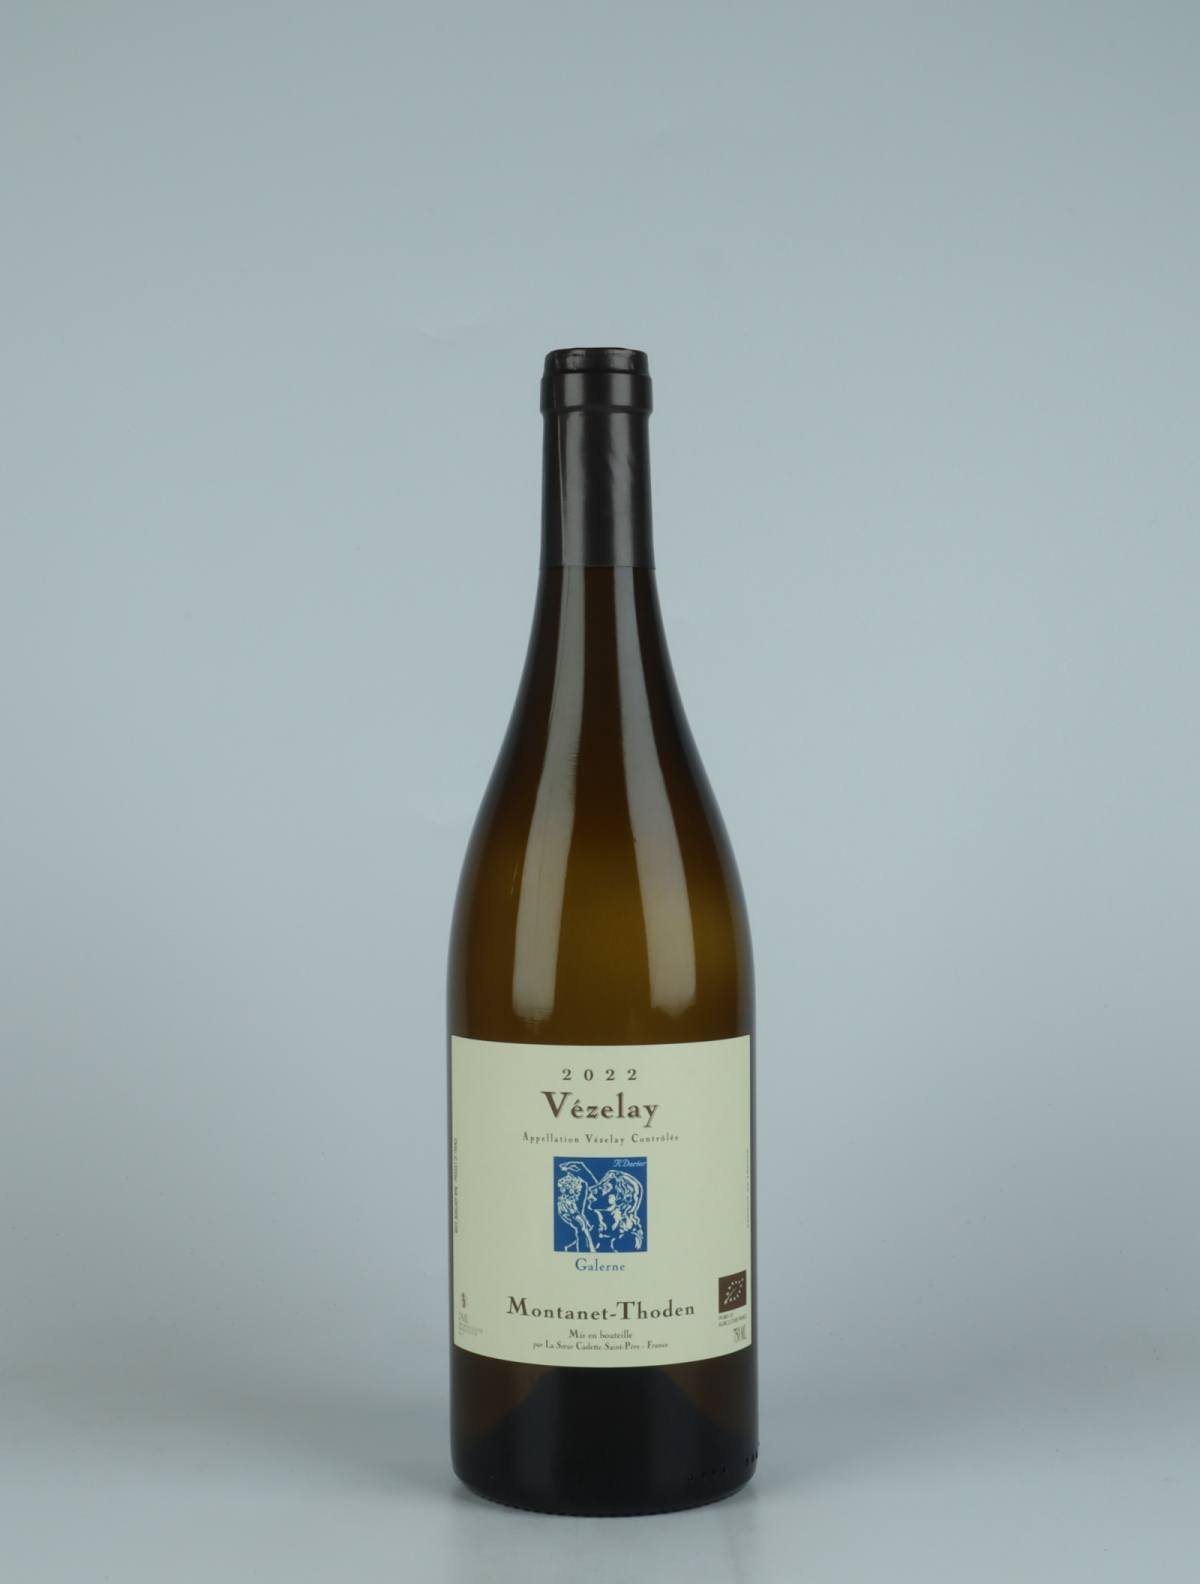 A bottle 2022 Bourgogne Vézelay - Galerne White wine from Domaine Montanet-Thoden, Burgundy in France